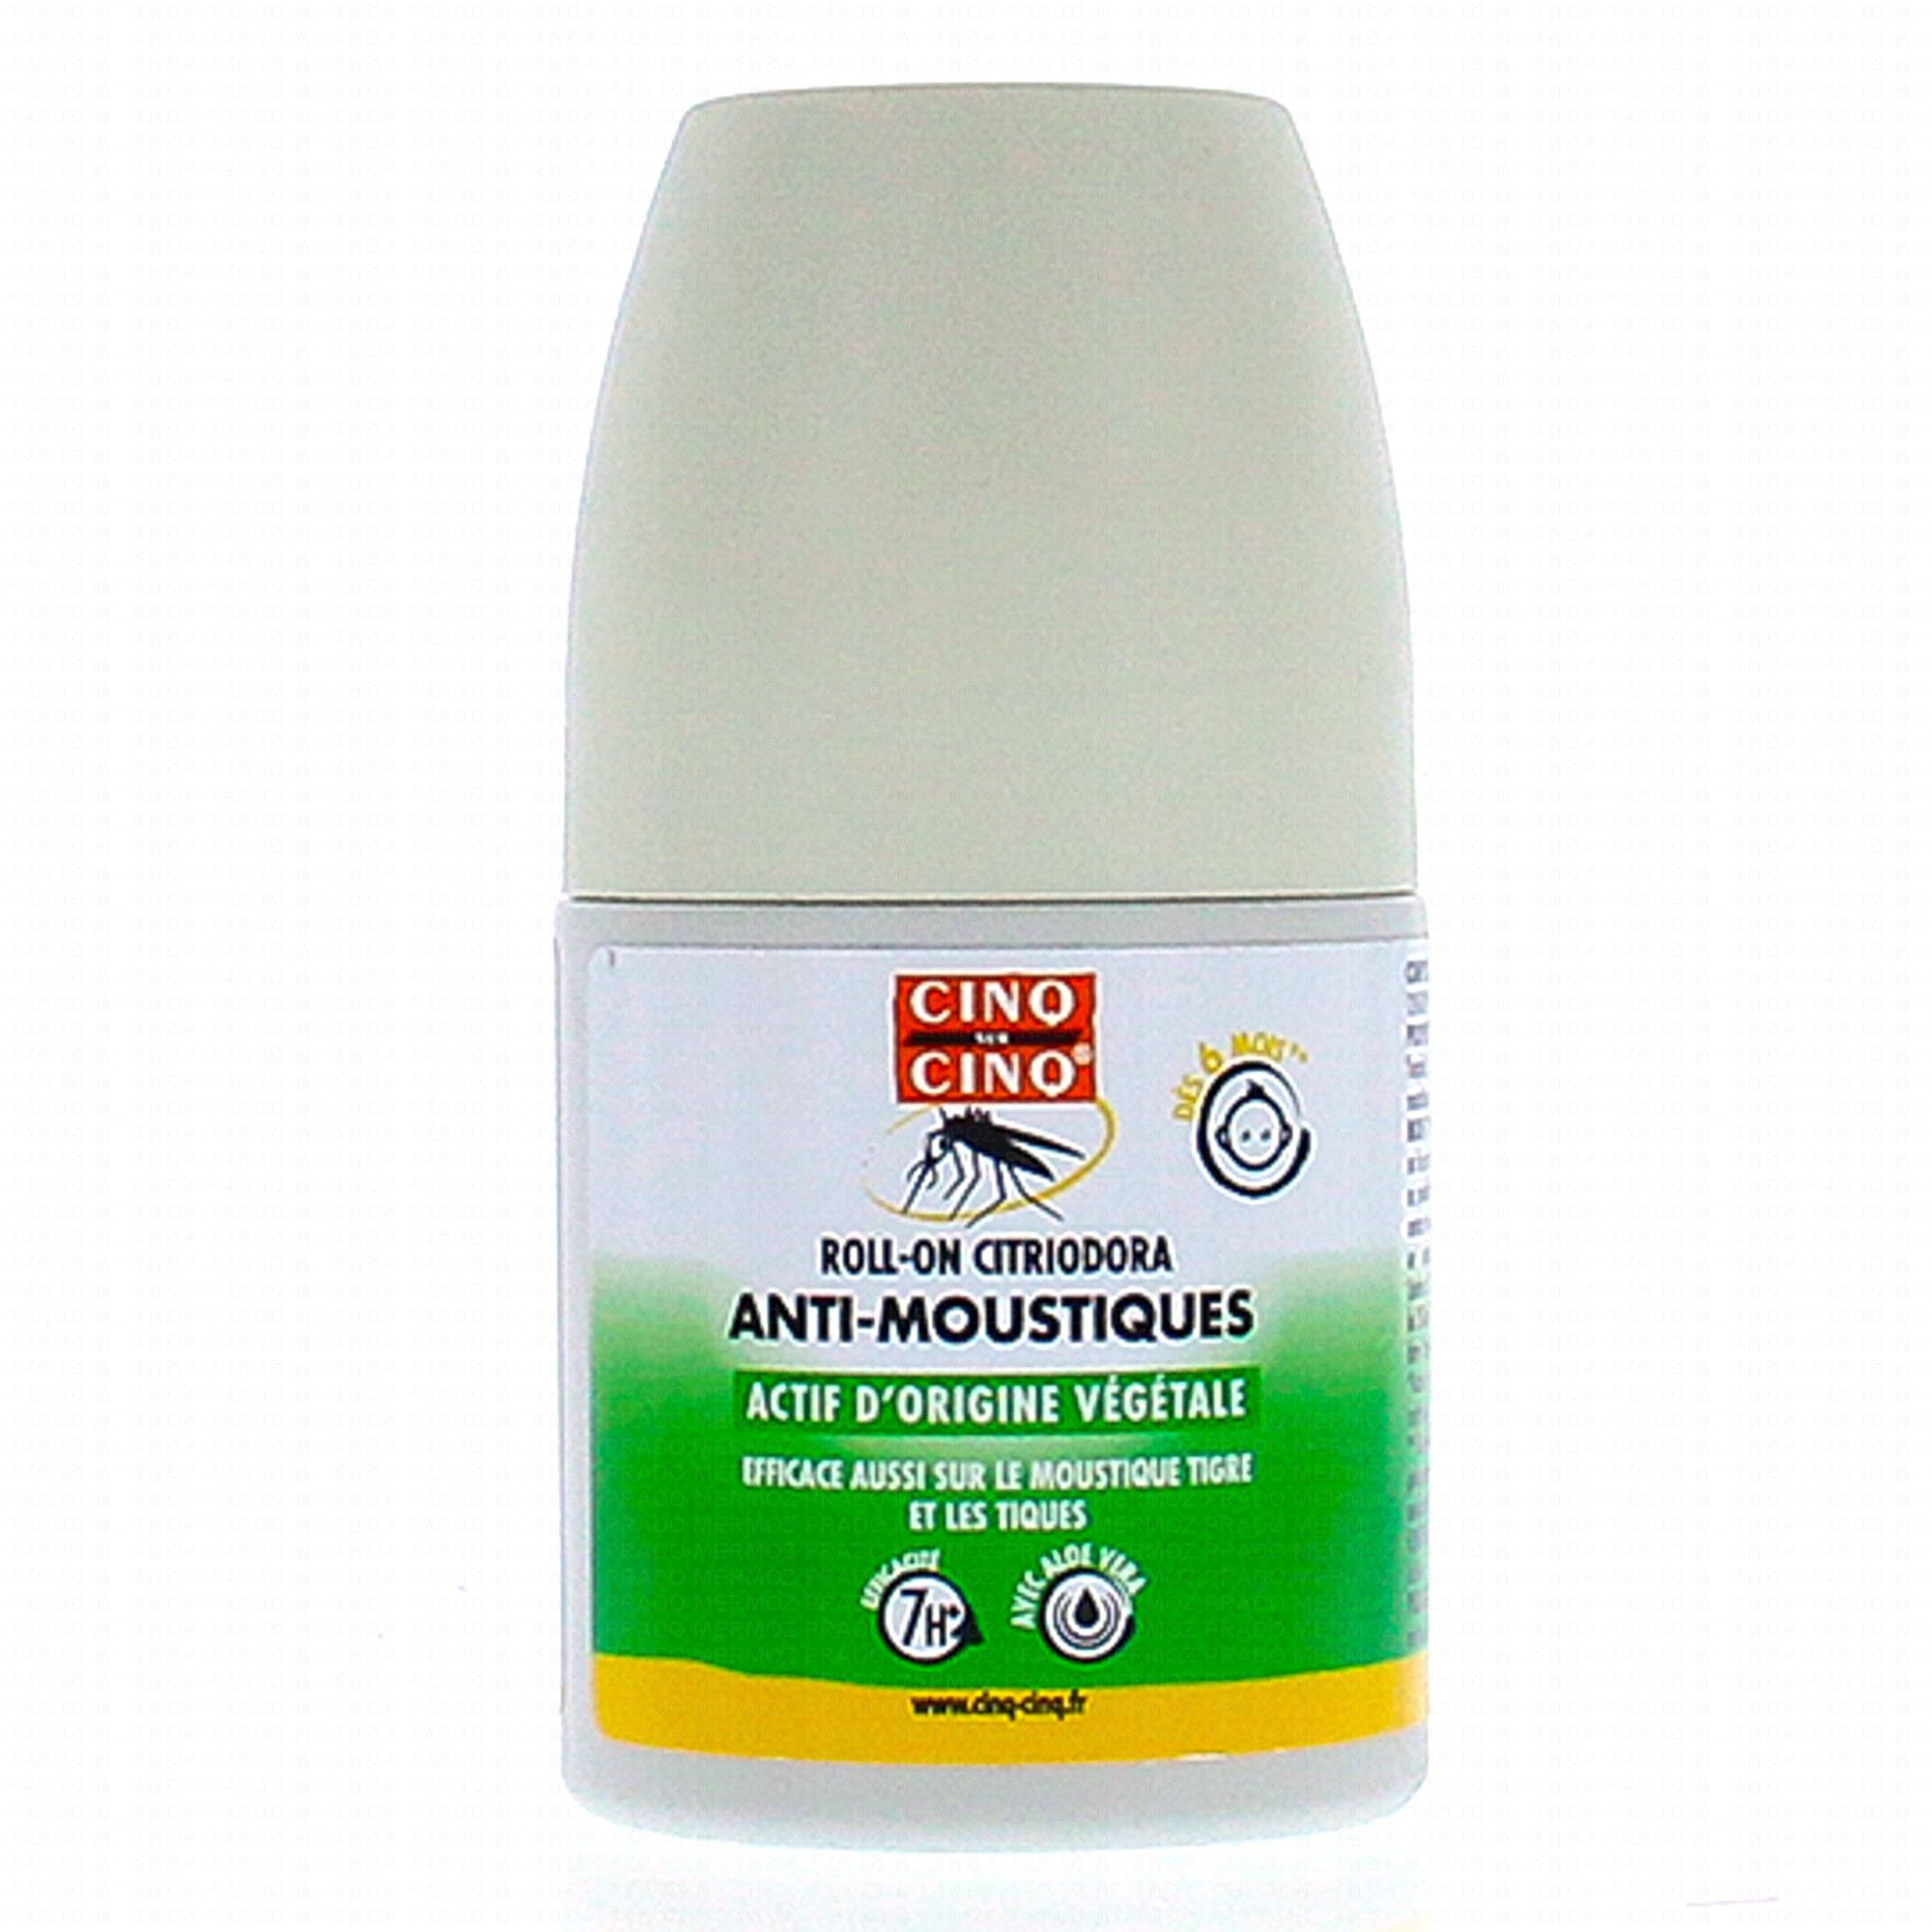 CINQ SUR CINQ Roll on anti moustiques 50ml - Parapharmacie Prado